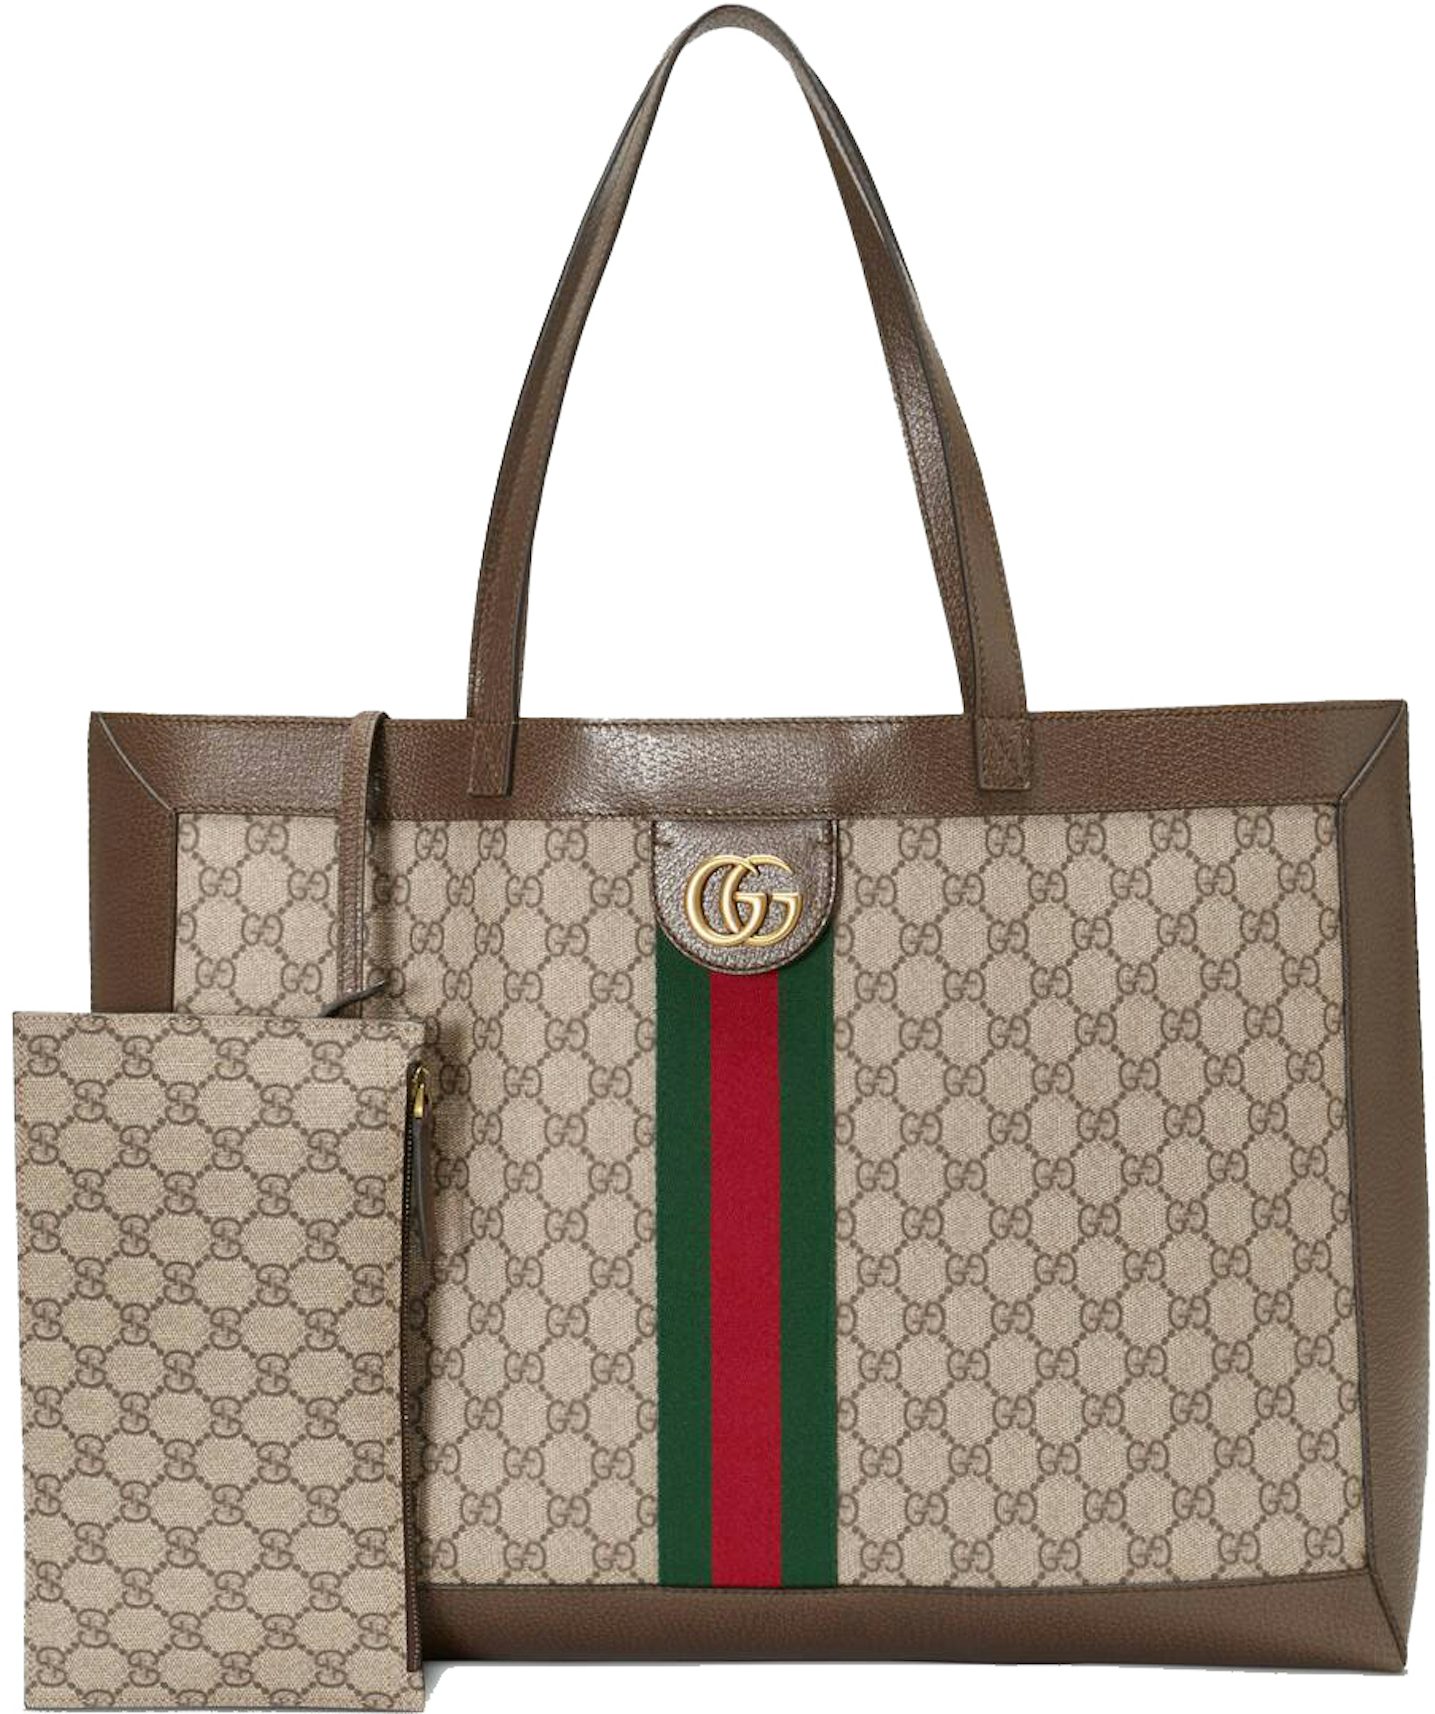 Gucci Ophidia GG Supreme Medium Suitcase - Grey